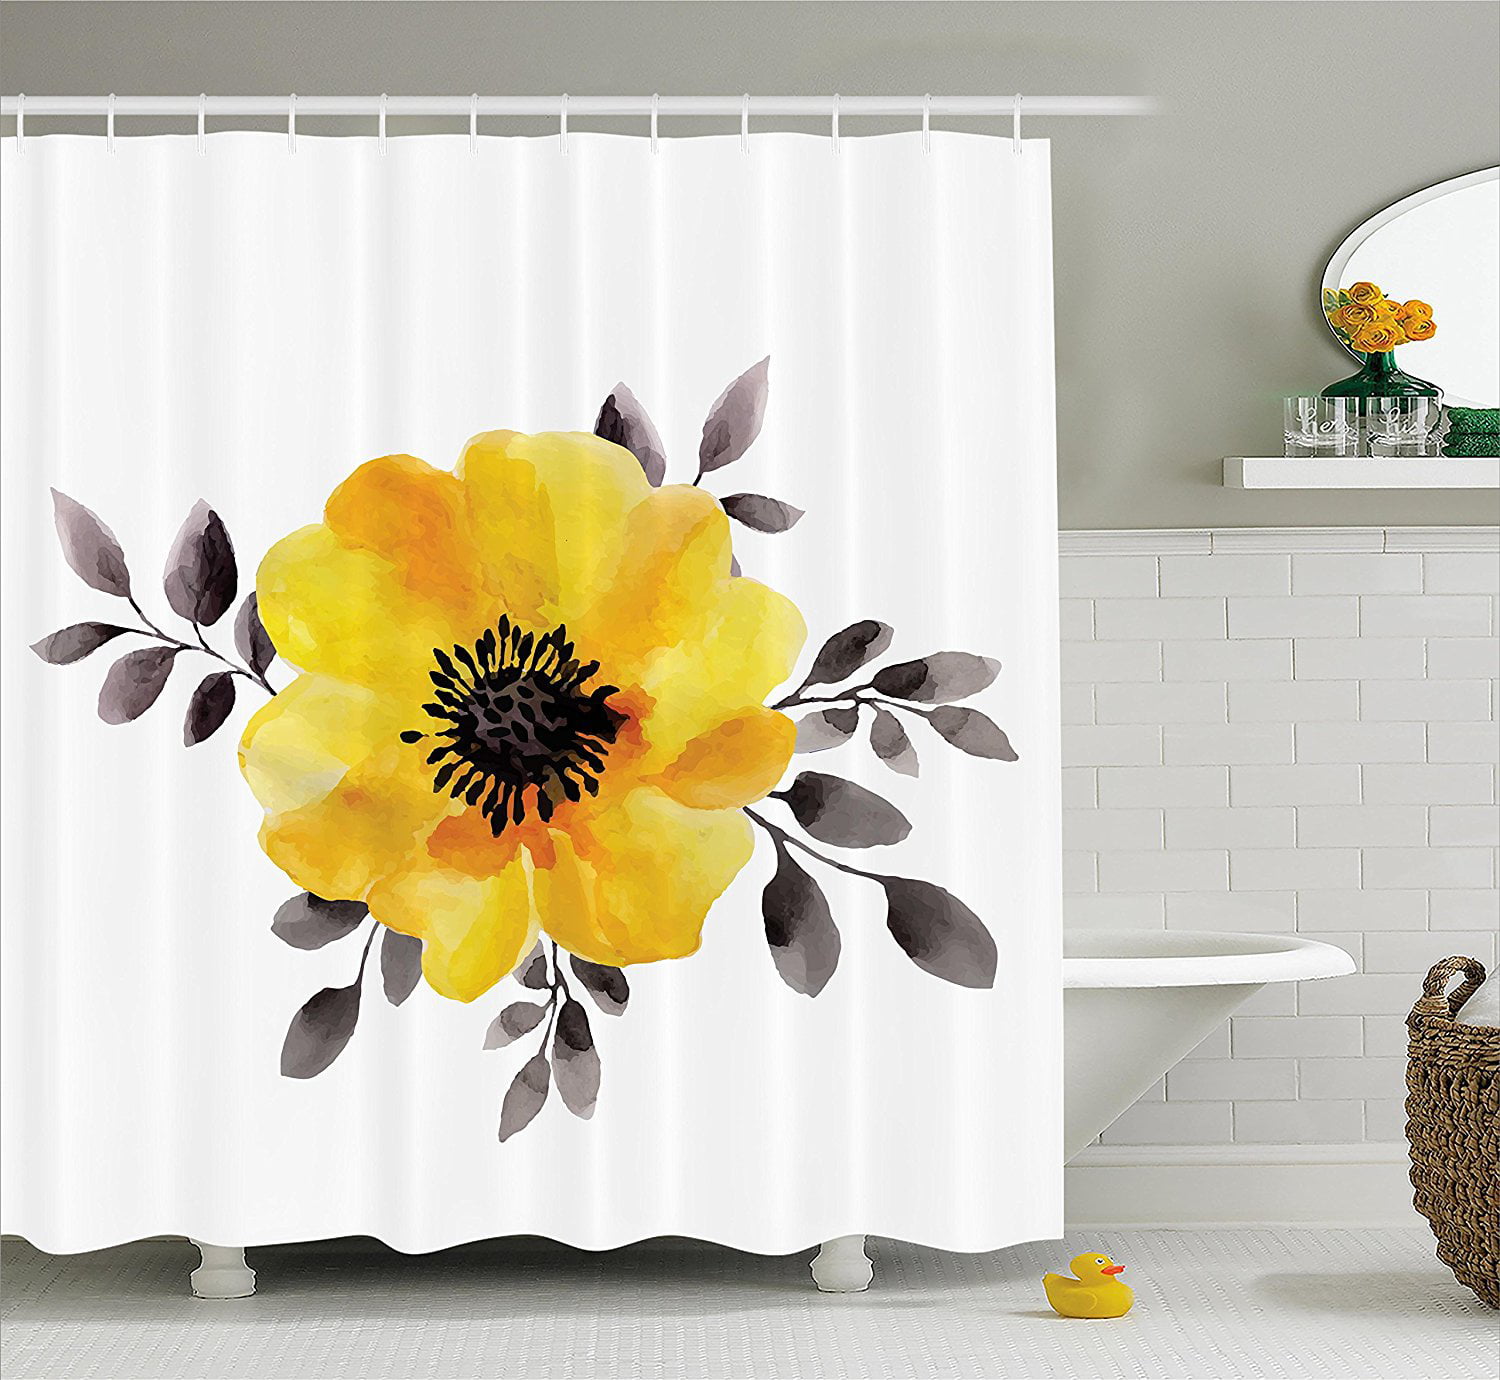 Art Words Design Waterproof Shower Curtain Sets Live Love Bathroom Decor Mat